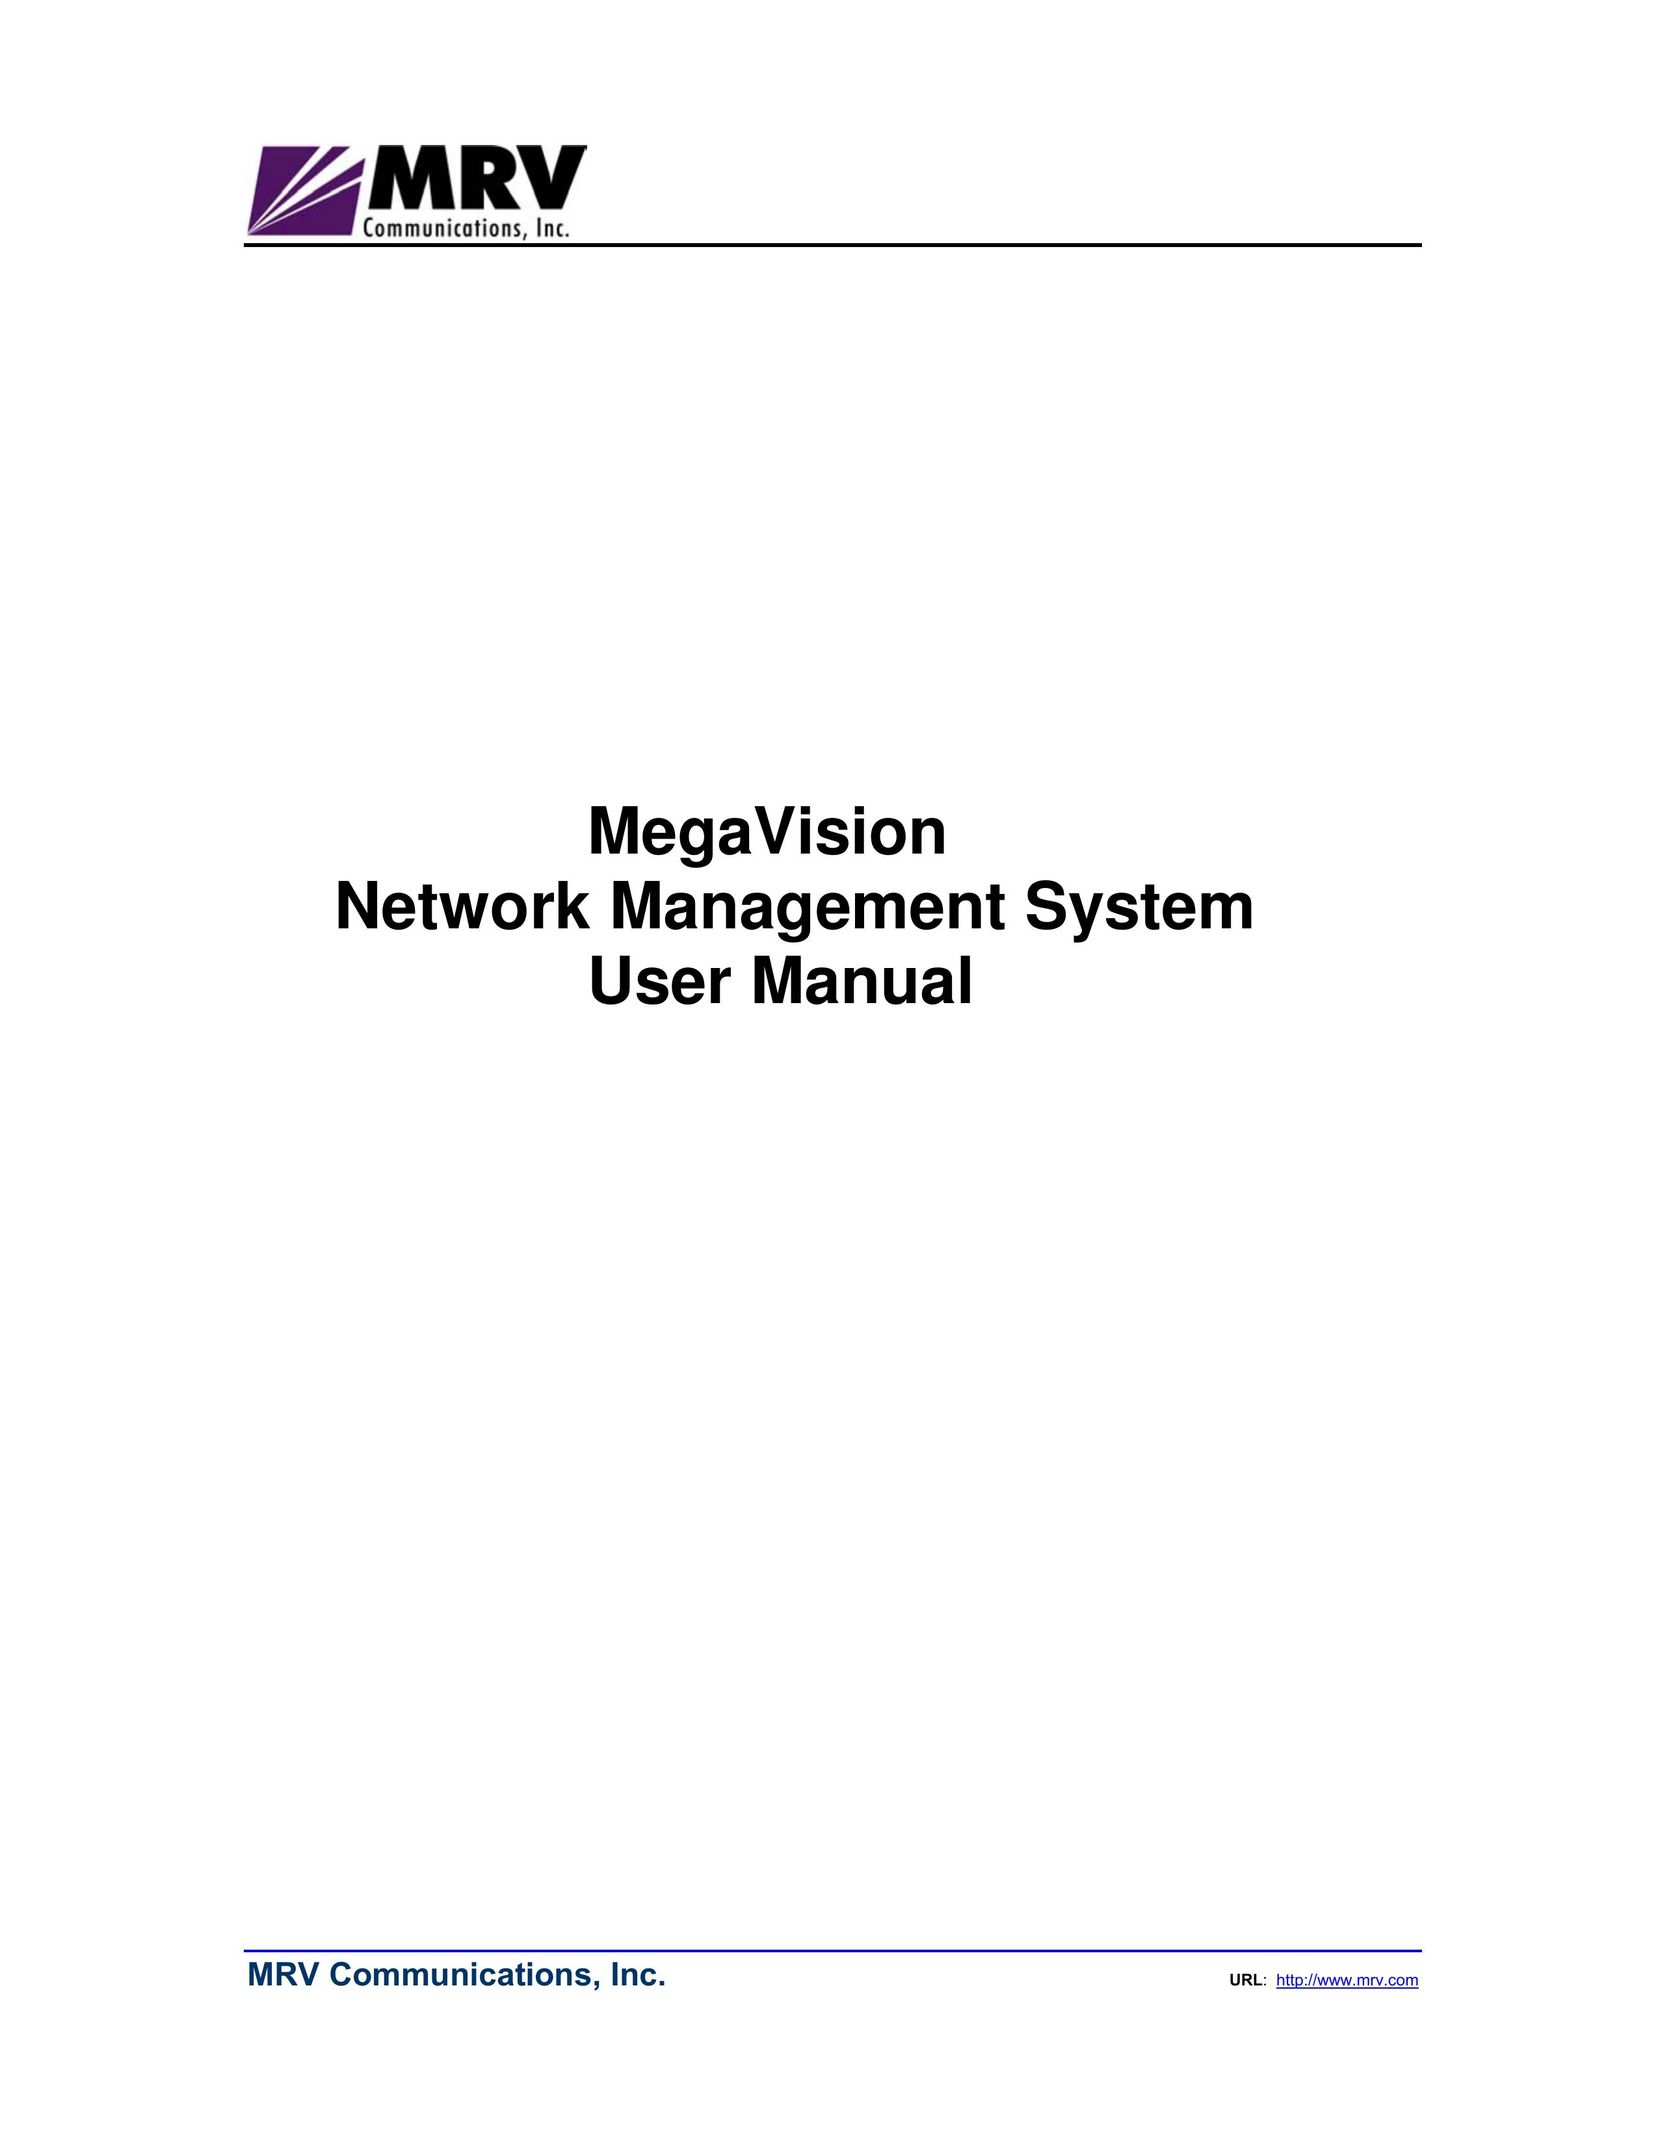 MegaVision Network Management System Network Card User Manual